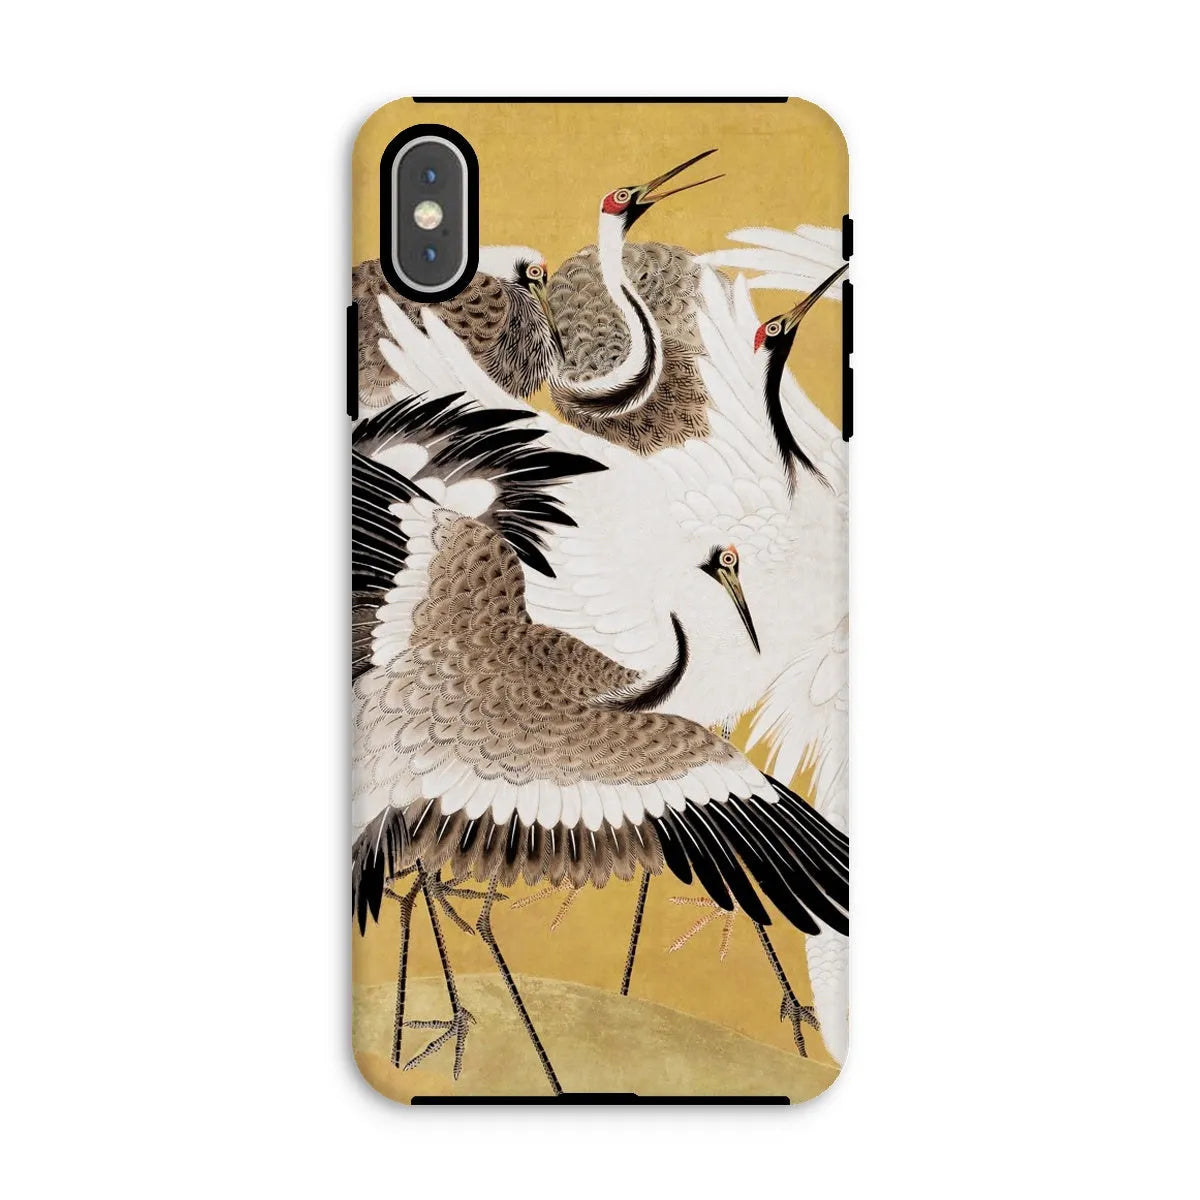 Flock Of Cranes Japanese Bird Art Phone Case - Ishida Yūtei - Iphone Xs Max / Matte - Mobile Phone Cases - Aesthetic